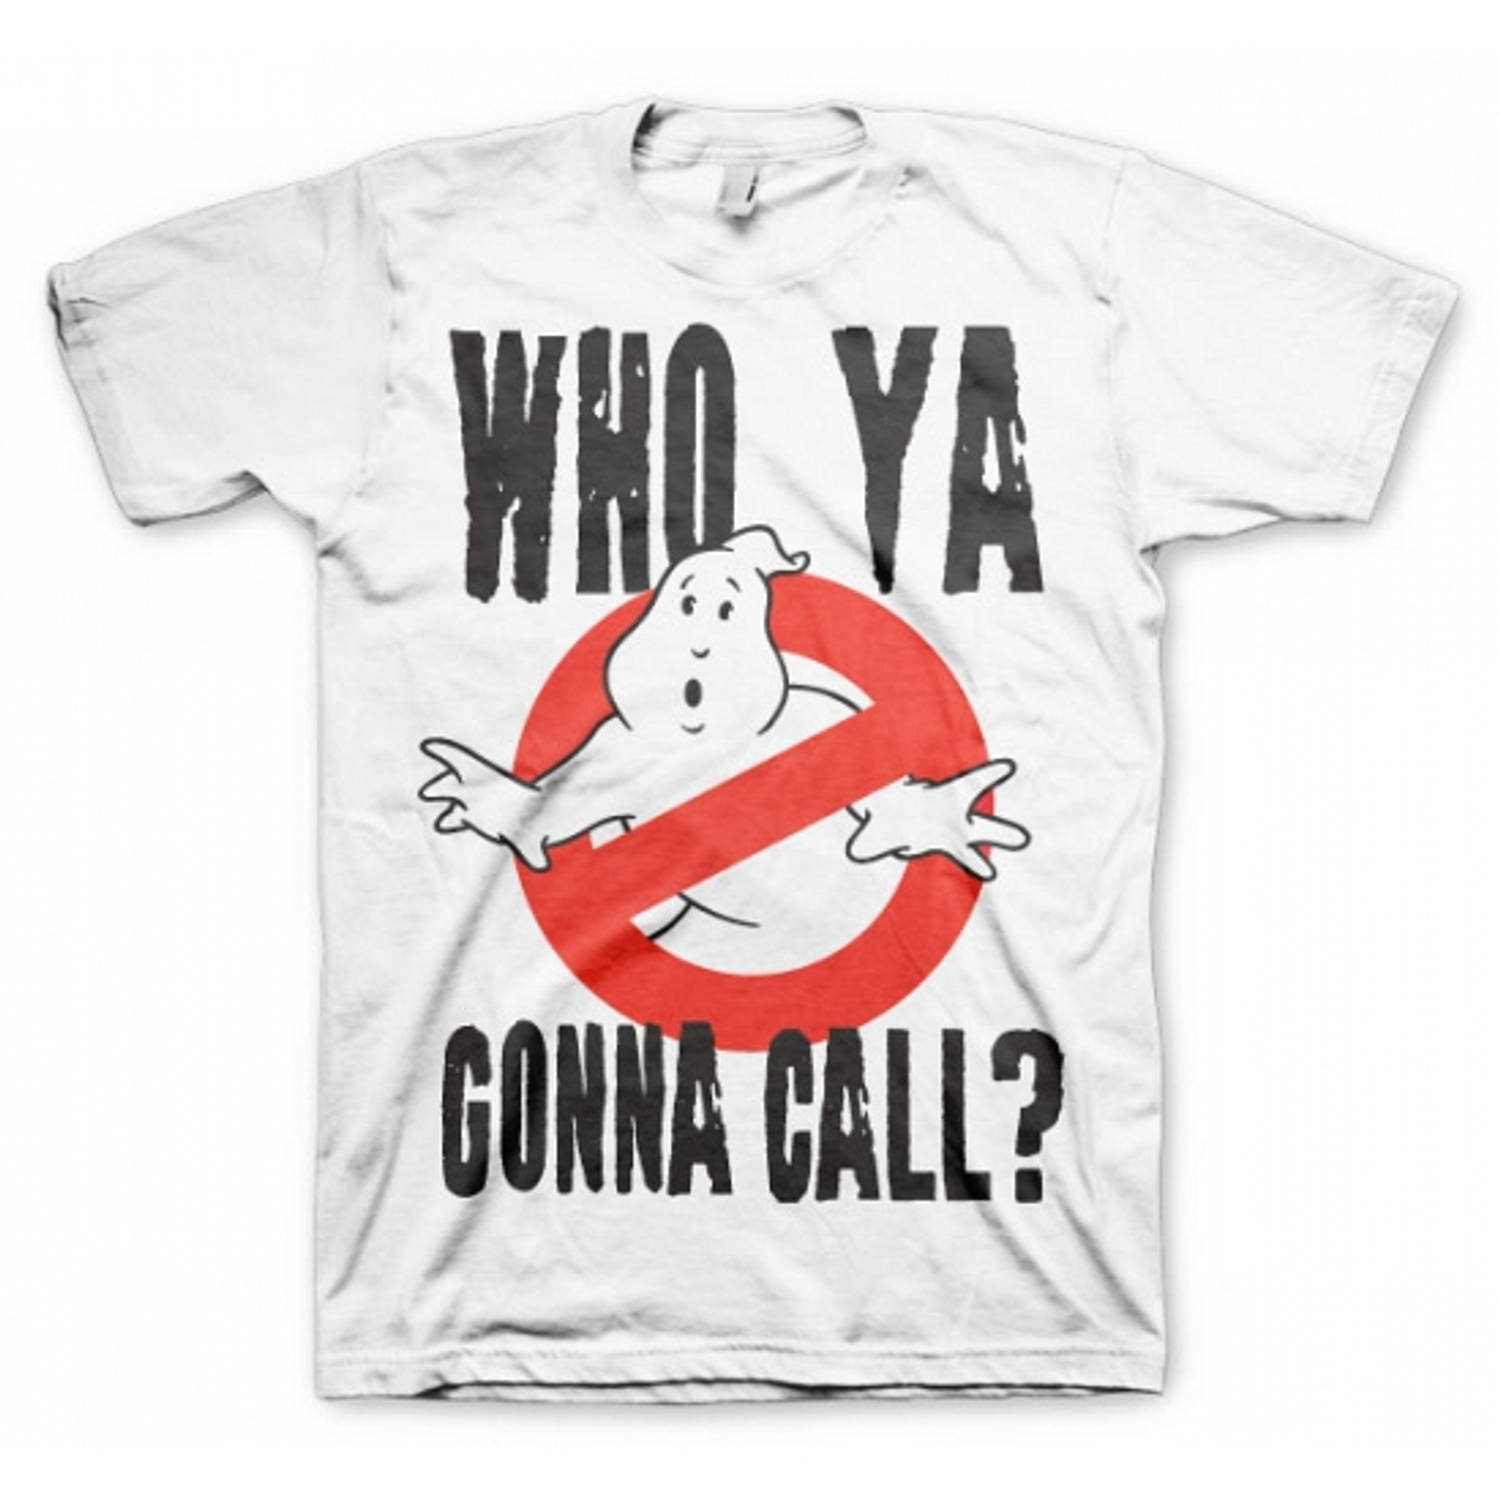 Ghostbusters - t-shirt who ya gonna call ? - white (xl)